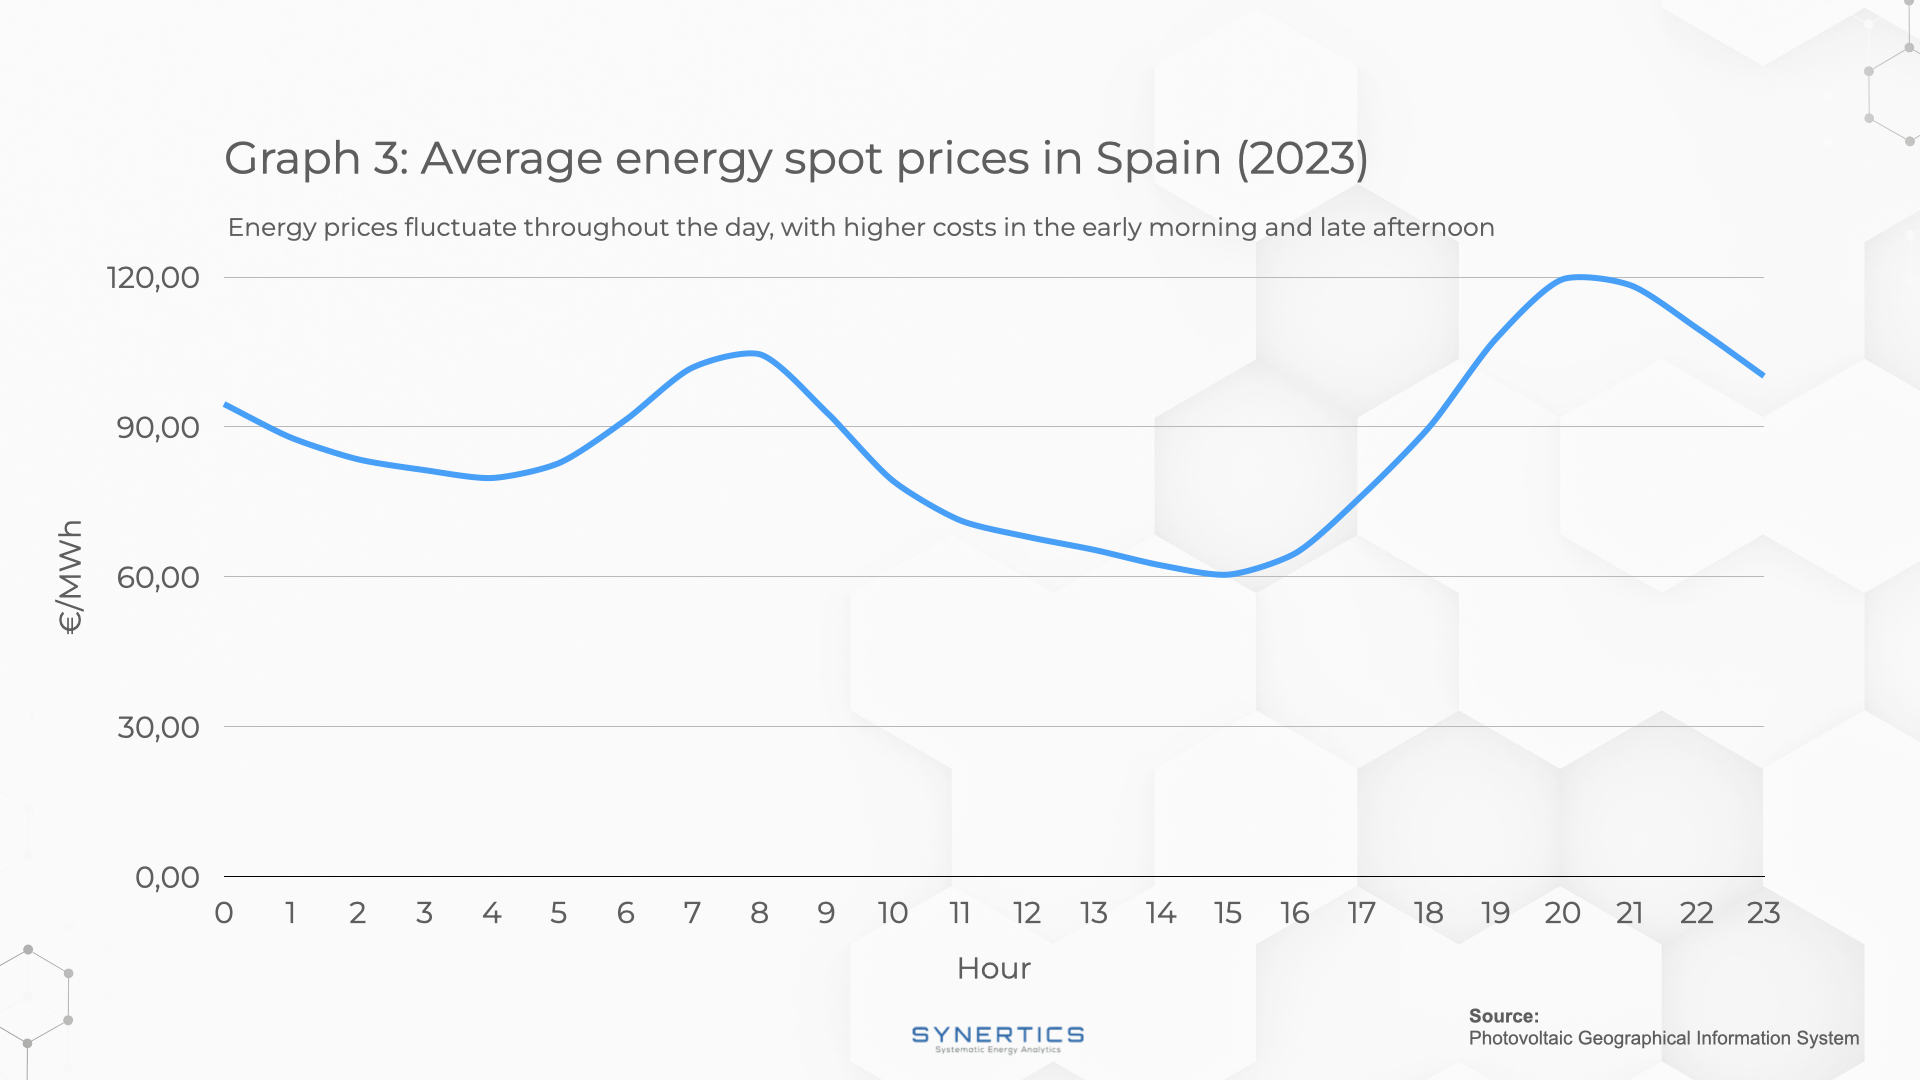 Average energy spot prices in Spain in 2023